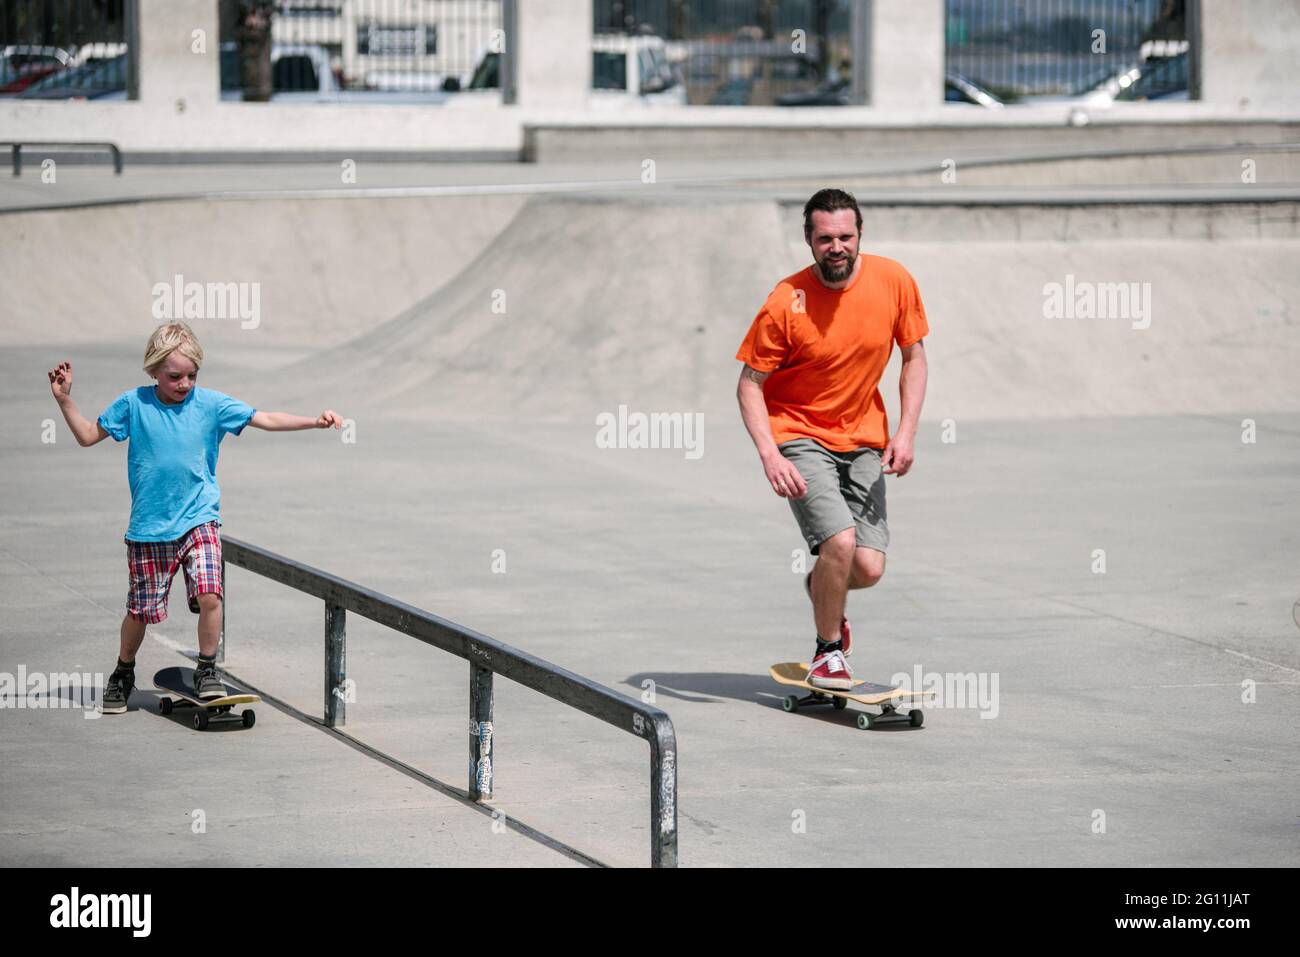 USA, California, Ventura, Father and son skateboarding in skate park Stock Photo